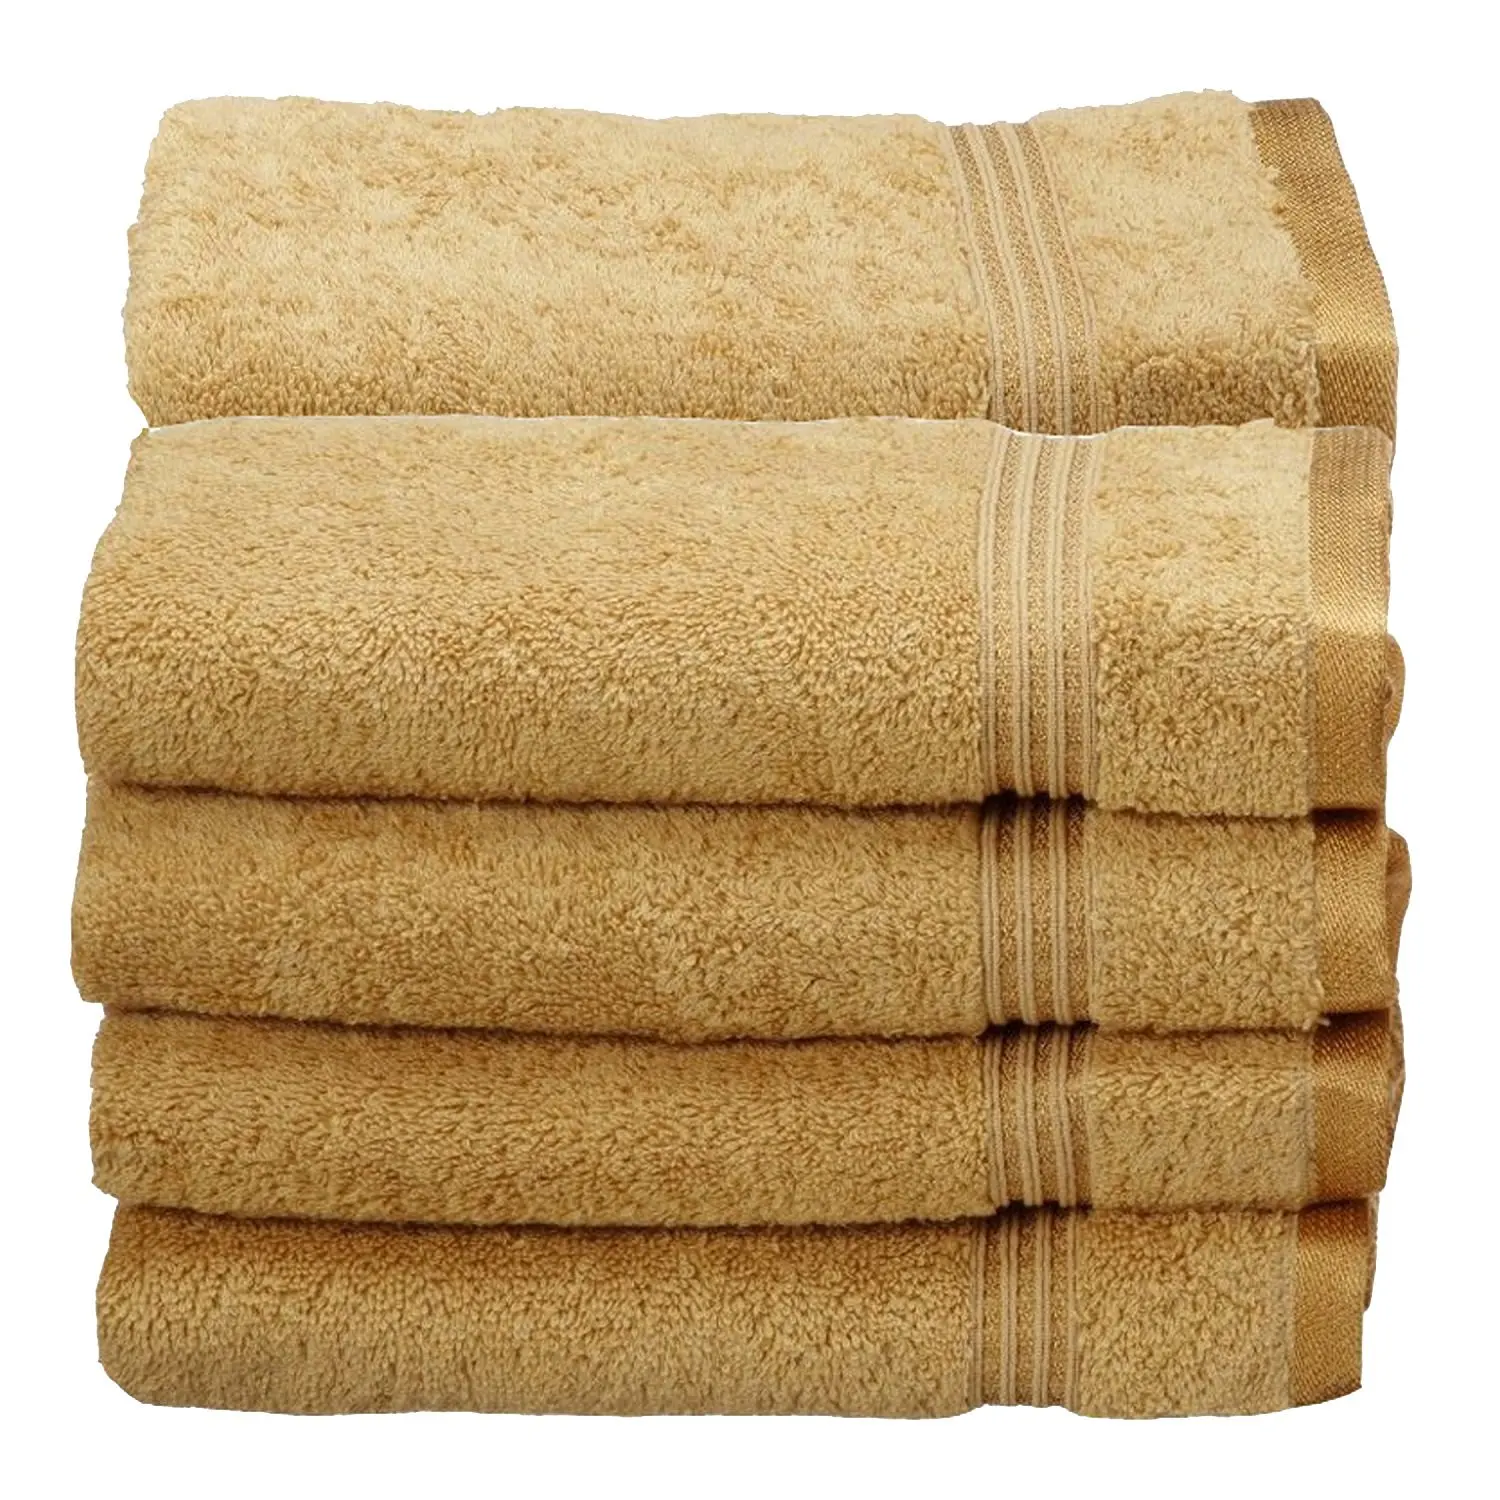 Золотая полотенца. Золотое полотенце. Махровое полотенце золотисто бежевый. Полотенце золотого цвета. Hand Towel.